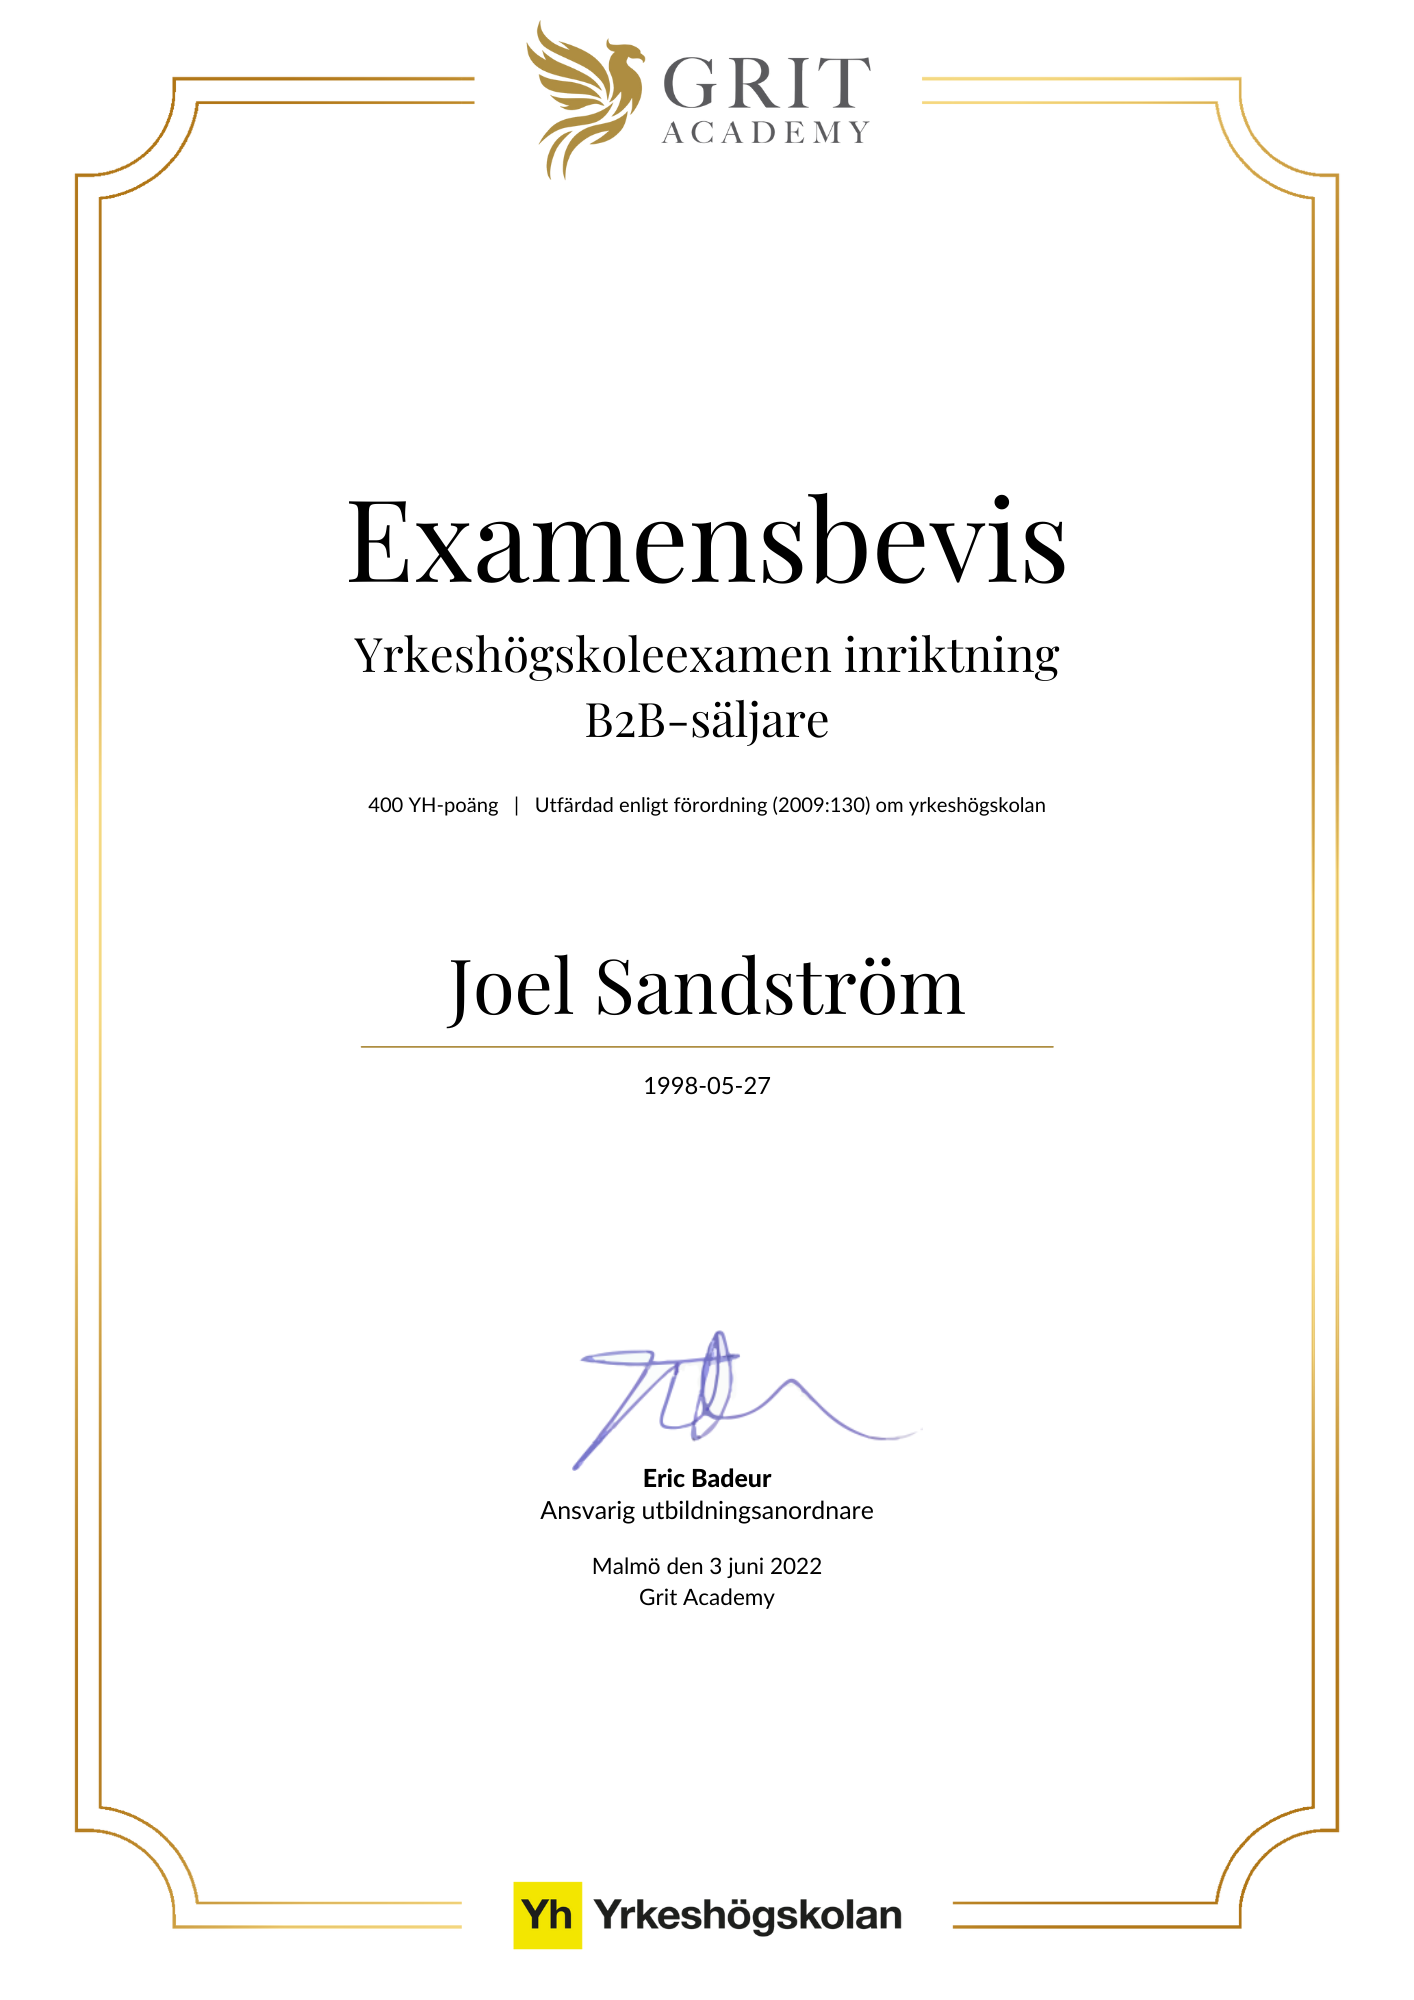 Examensbevis Joel Sandström